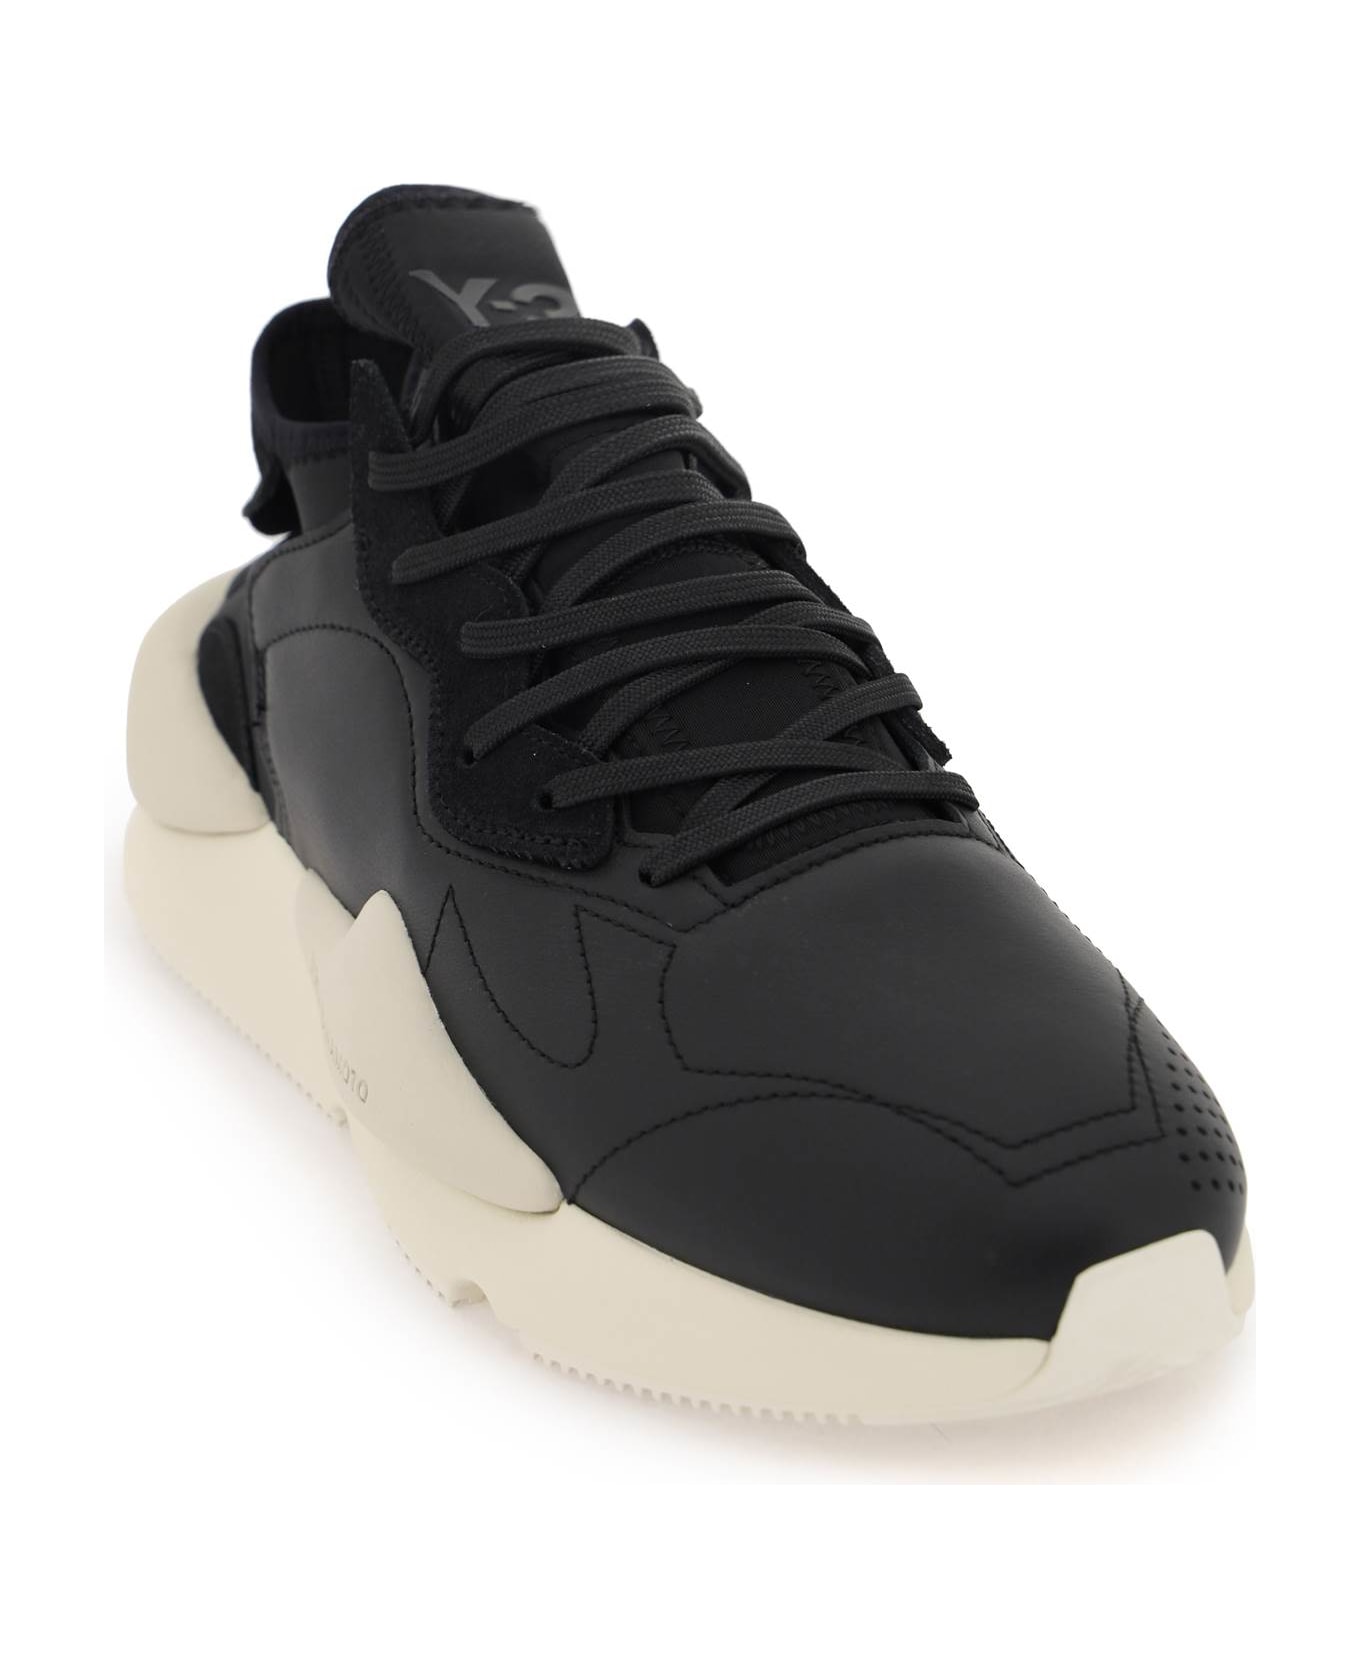 Y-3 Black Leather Blend Sneakers - Black/owhite/cbro スニーカー